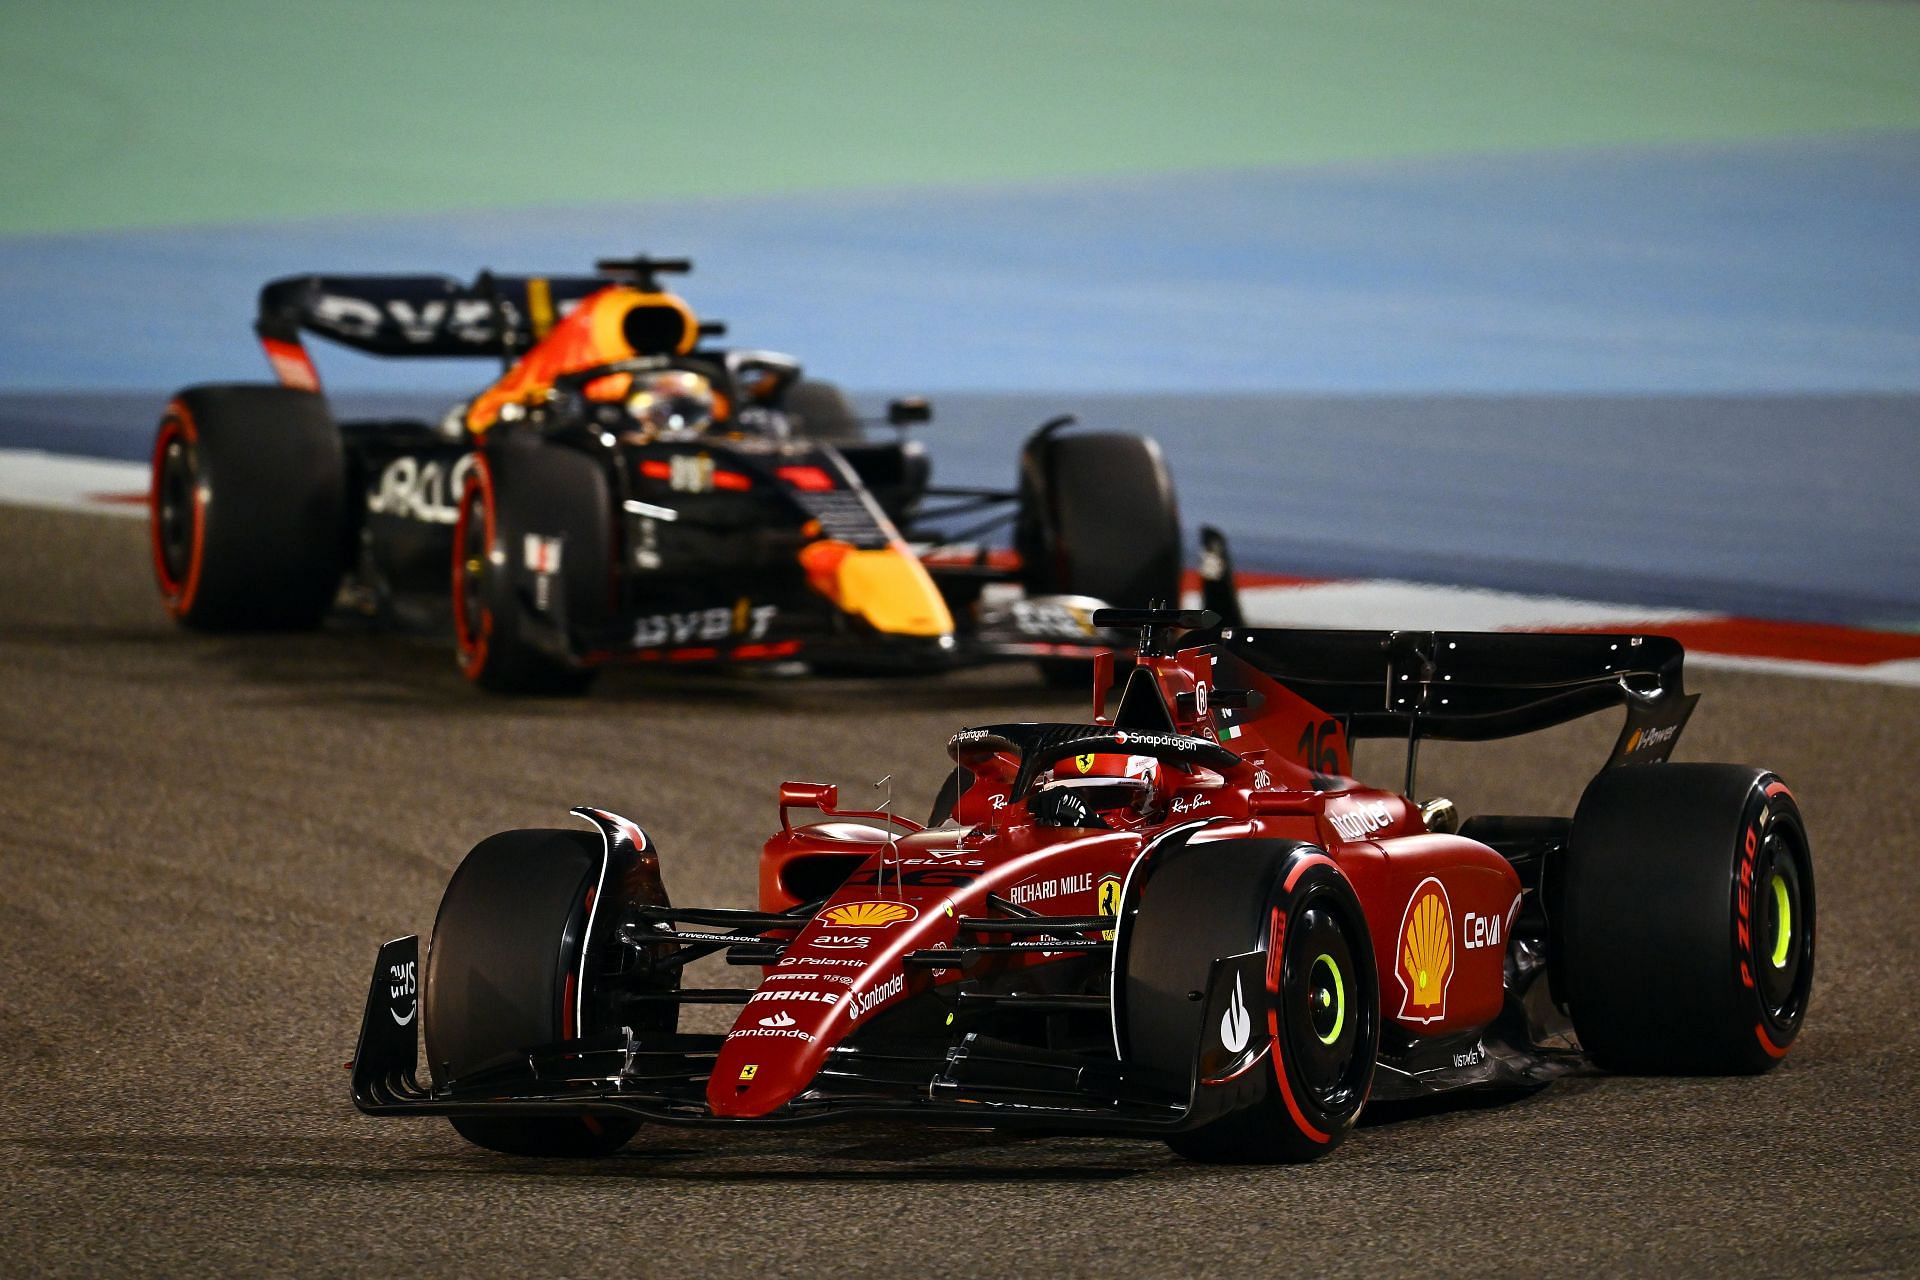 Ferrari&#039;s Charles Leclerc leading Red Bulls&#039; Max Verstappen in Formula 1 Bahrain Grand Prix. (Image via Clive Mason/Getty Images)